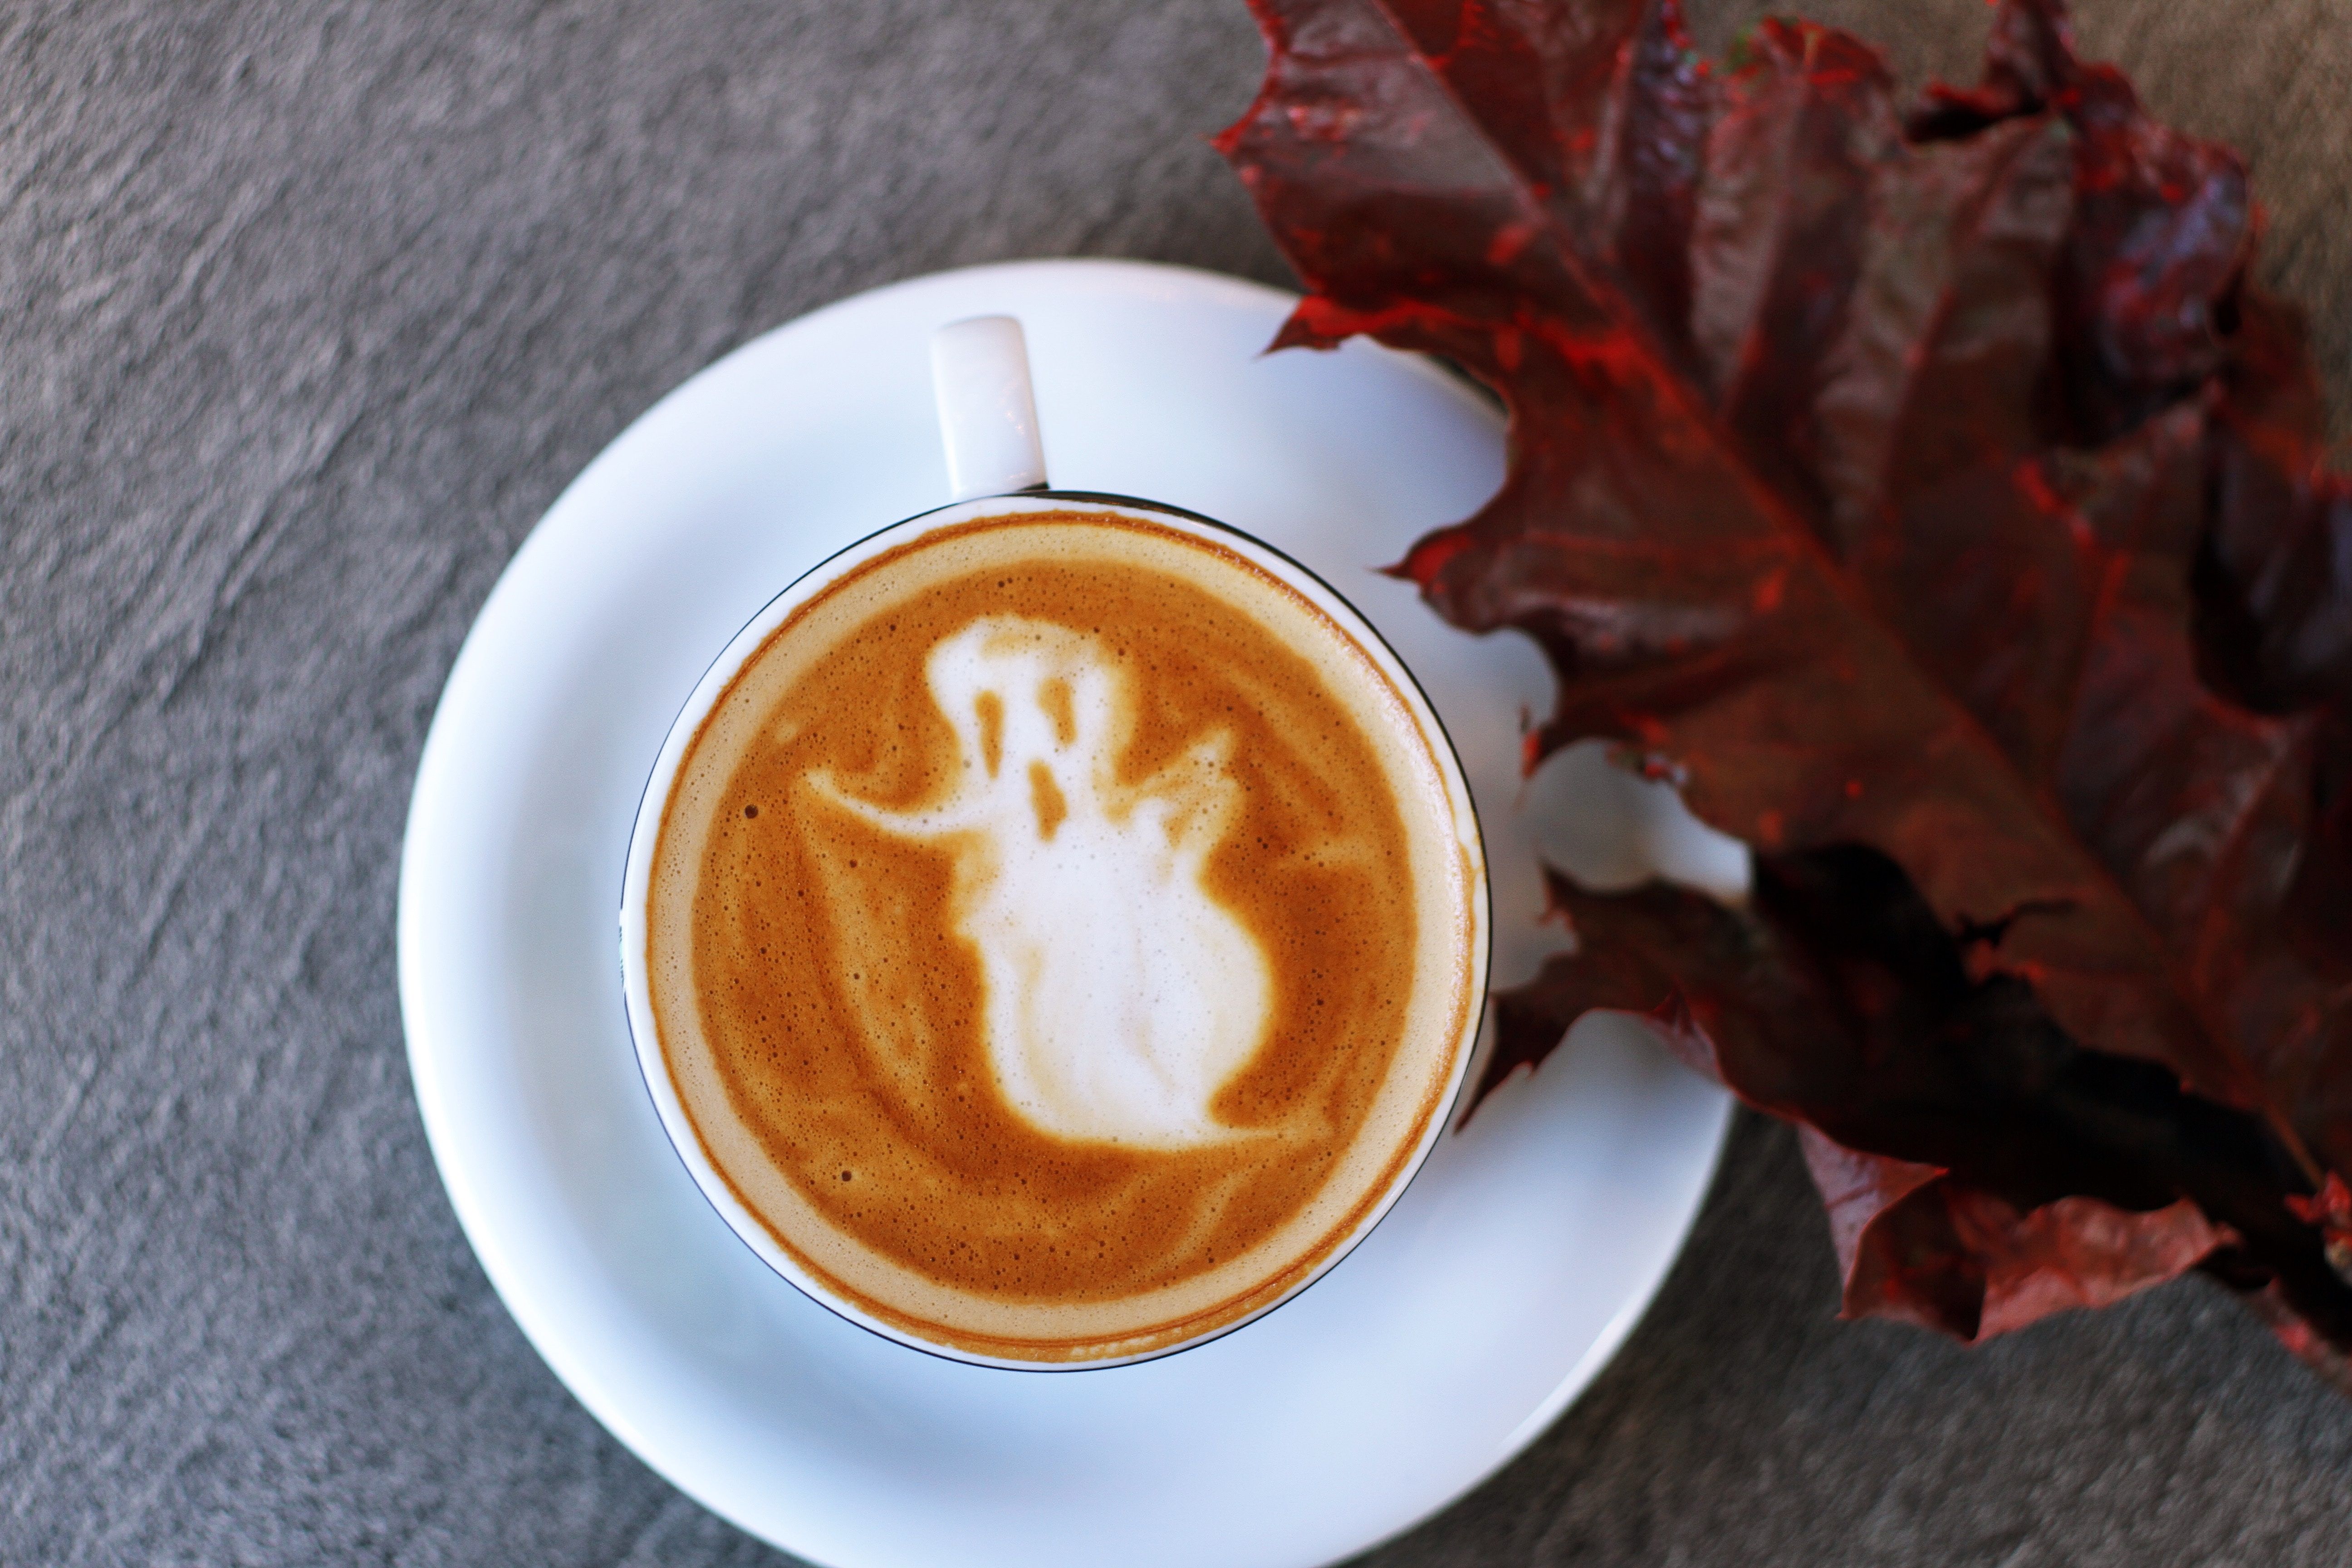 5184x3456 #funny background, #autumn, #fall, #halloween, #ghost, # wallpaper, #warm drink, #latte, #funny wallpaper, #mug, #espresso, #Creative Commons image, #october, #spooky, #coffee shop, #cup, #latte art, #coffee. Mocah.org HD Desktop